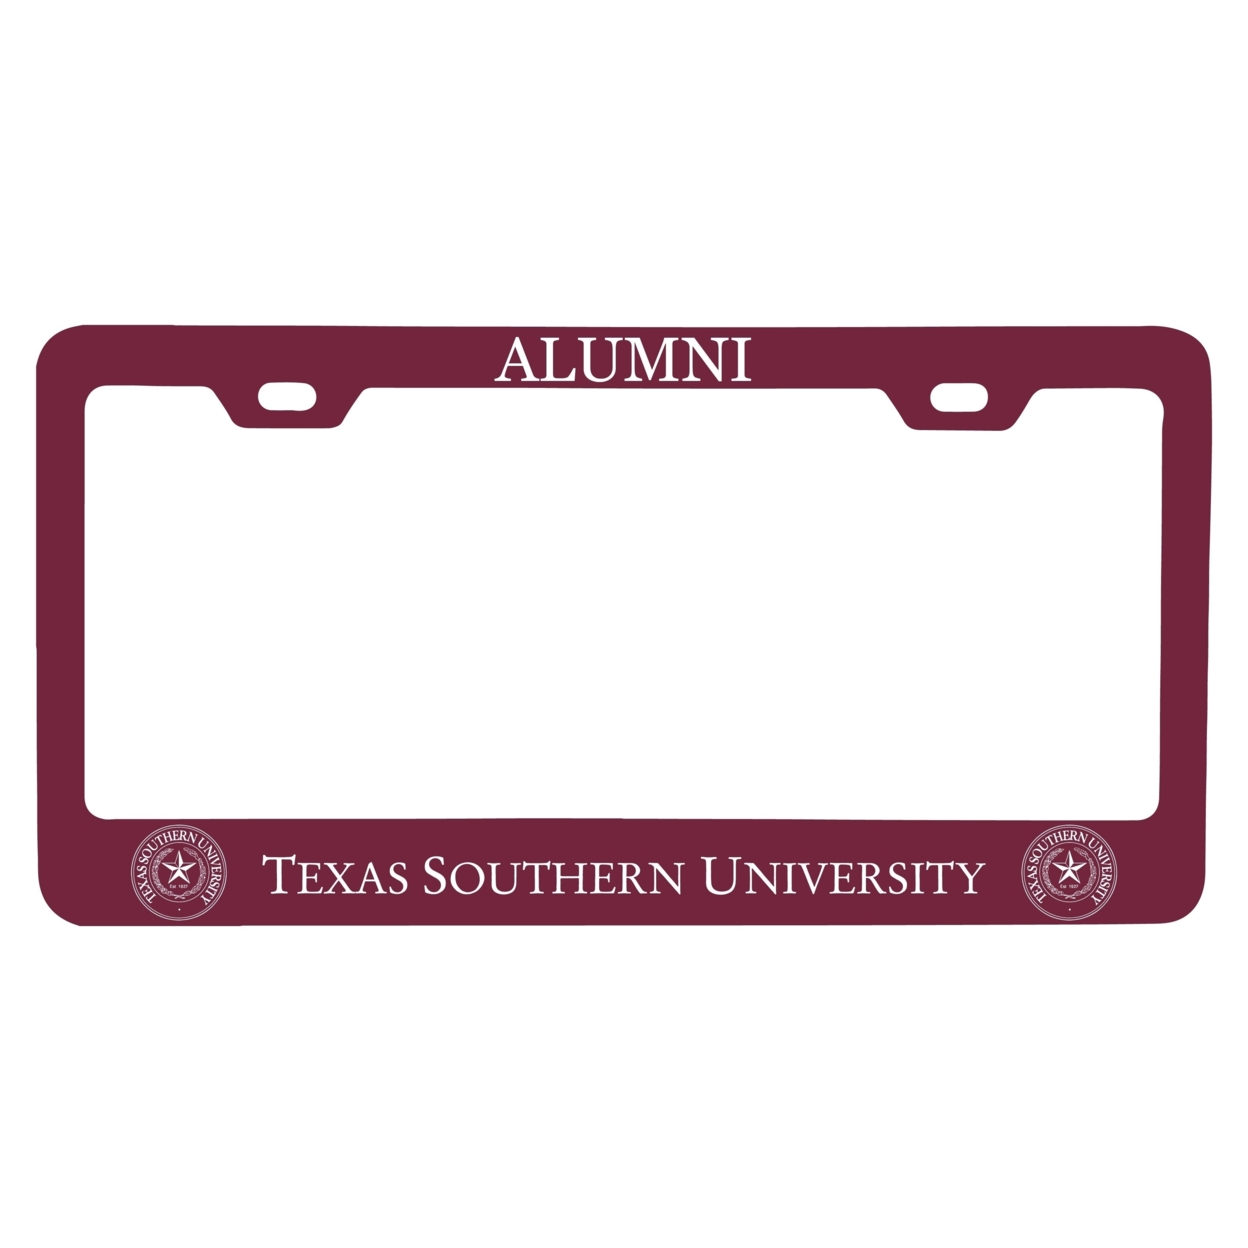 Texas Southern University Alumni License Plate Frame